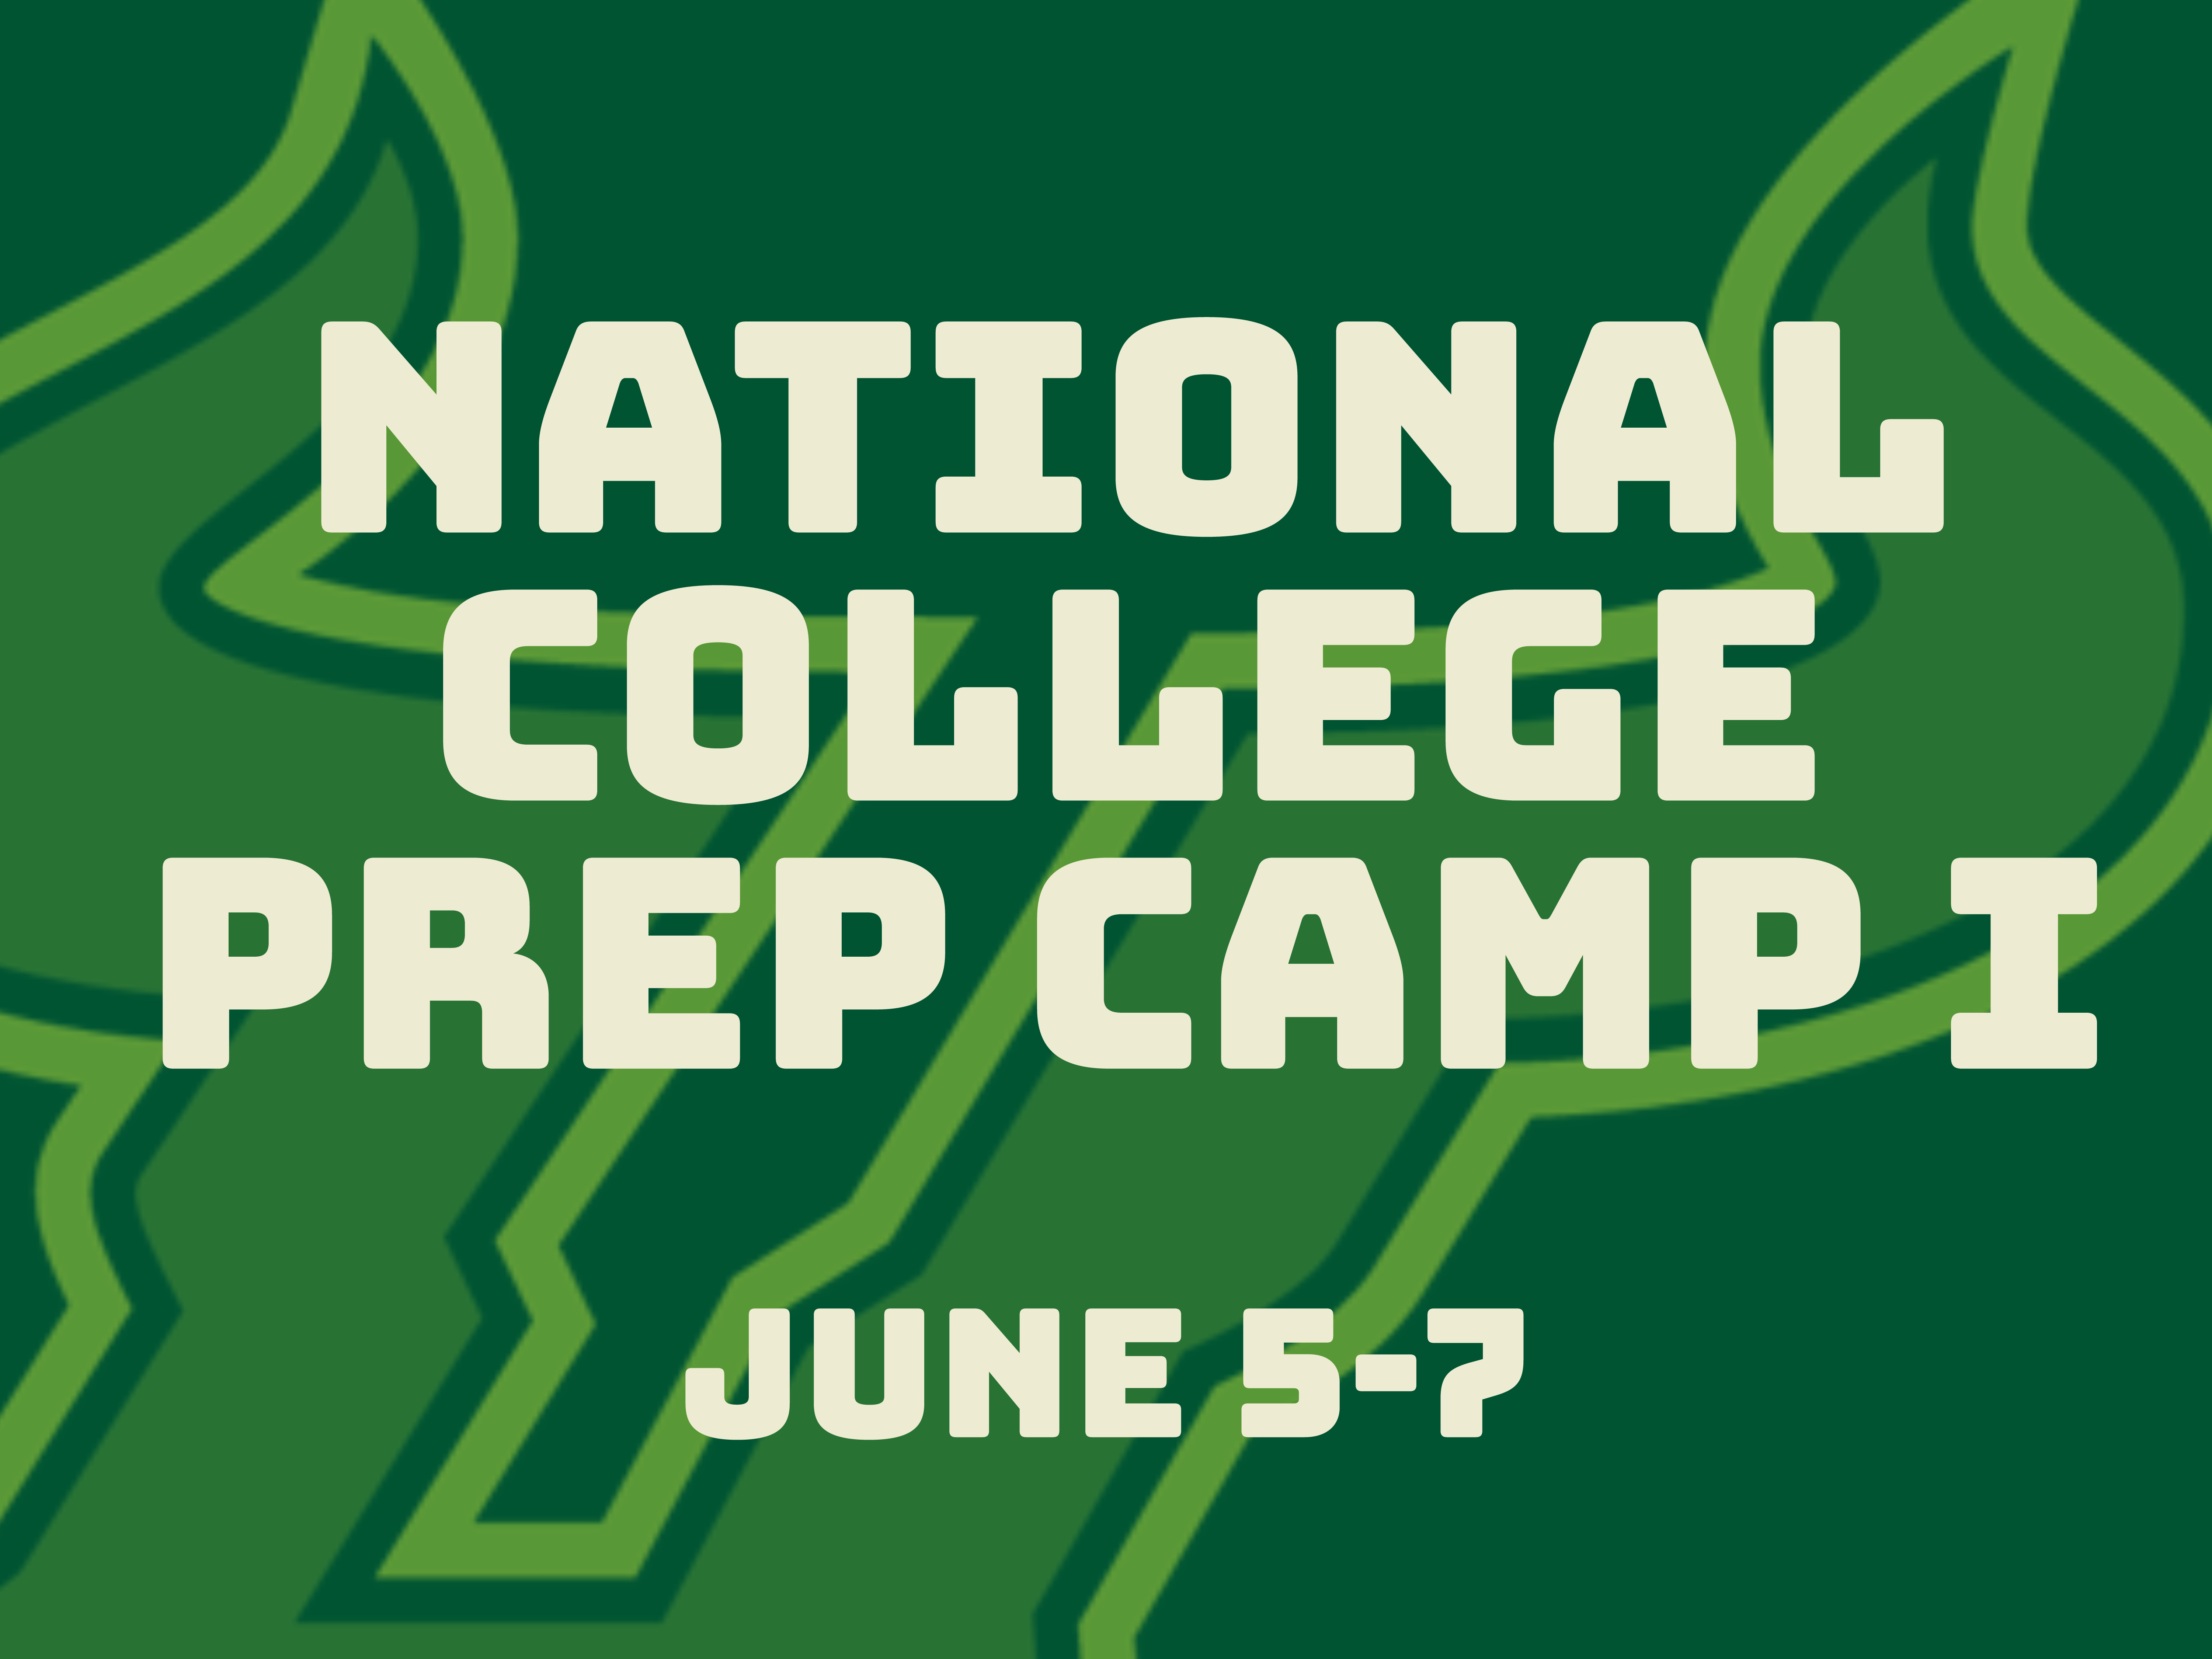 National College Prep Camp I  event image